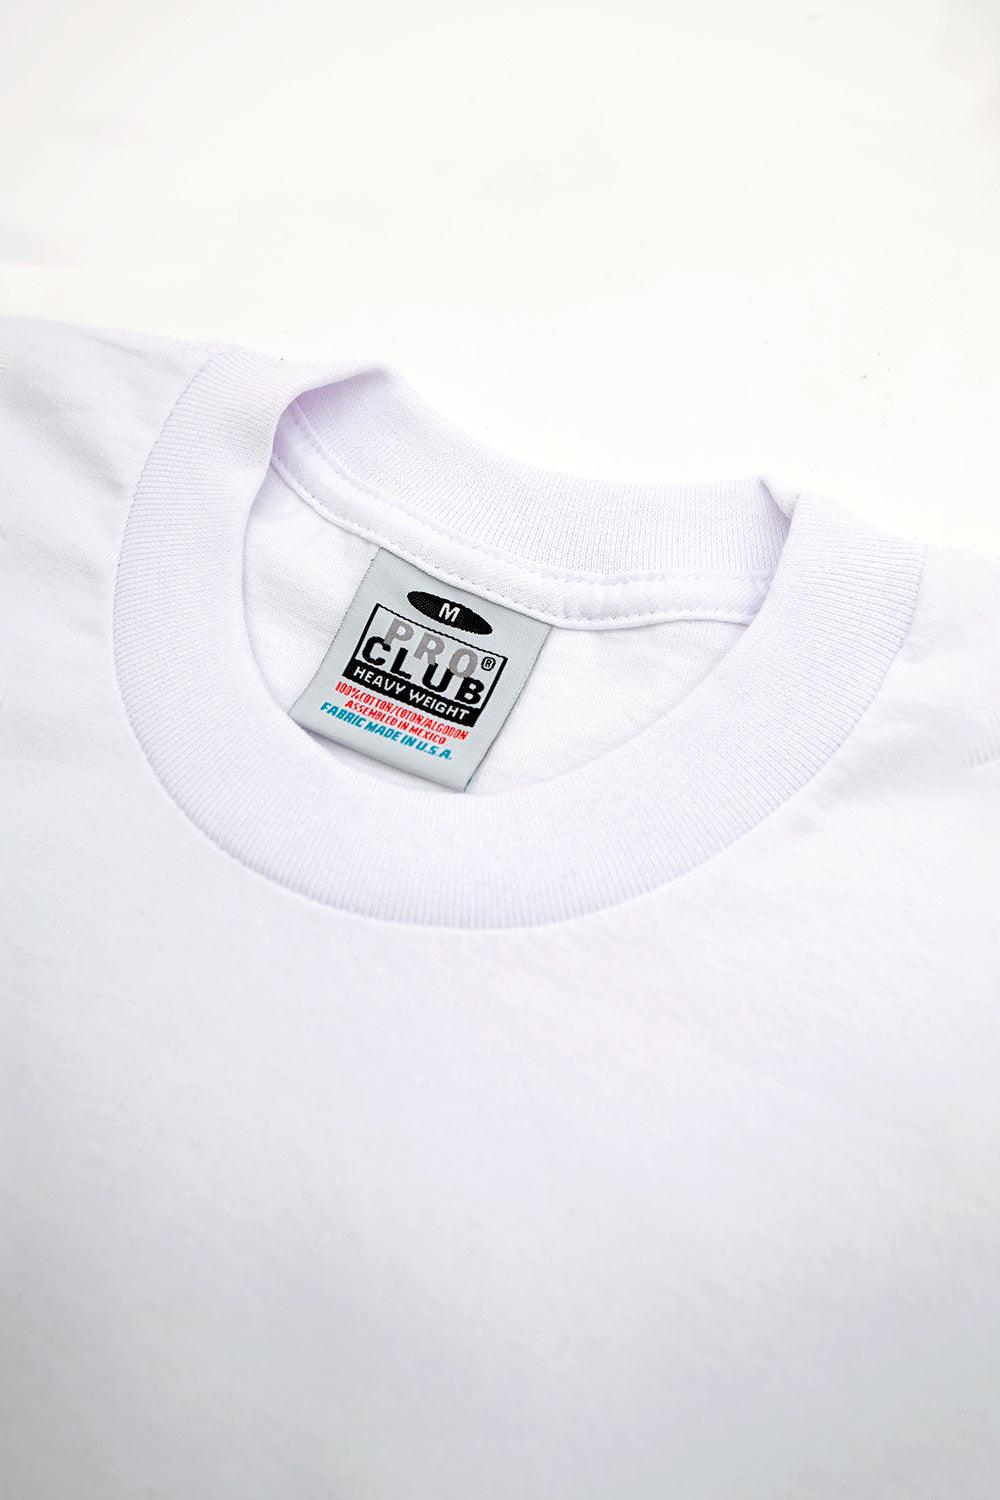 PROCLUB T-shirt Heavyweight Blanc - suuupply